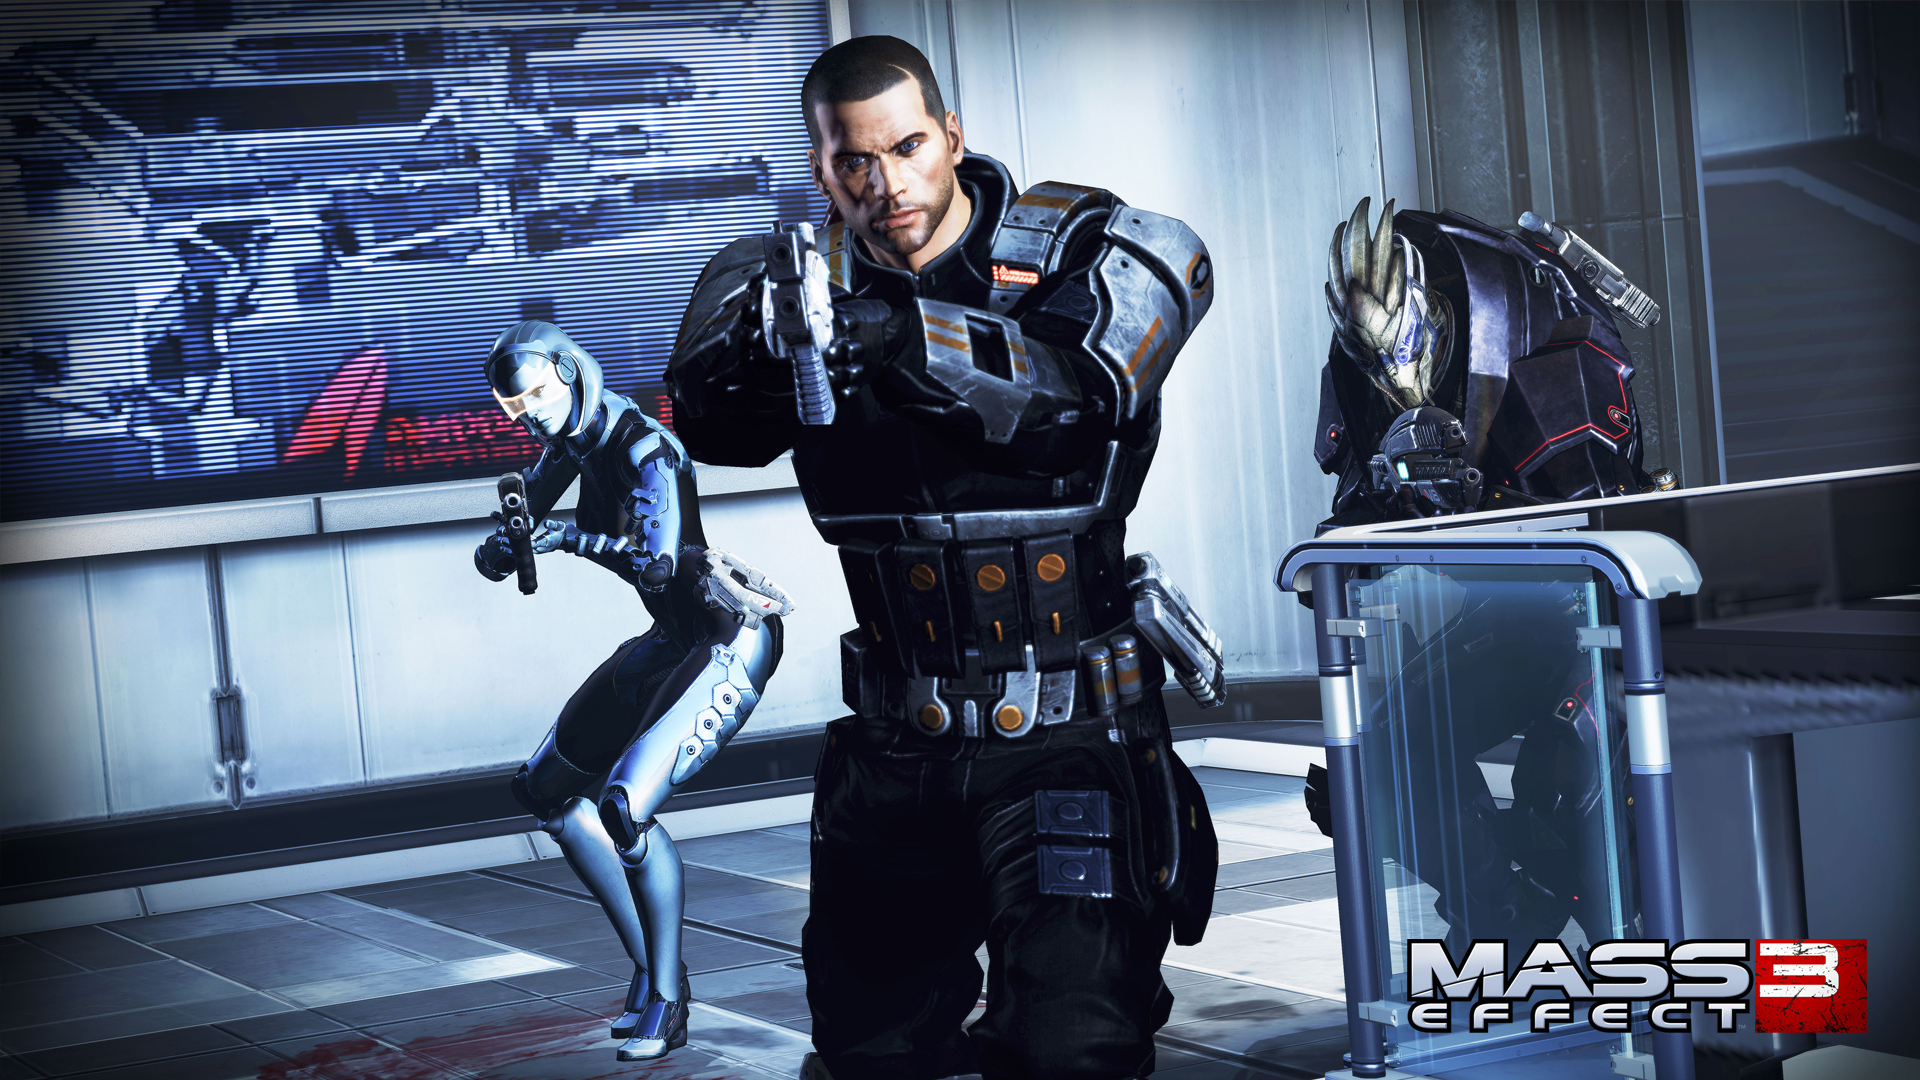 Mass Effect, Shepard, Commander Shepard, EDI, Garrus, Game, Bioware, RPG, FPS